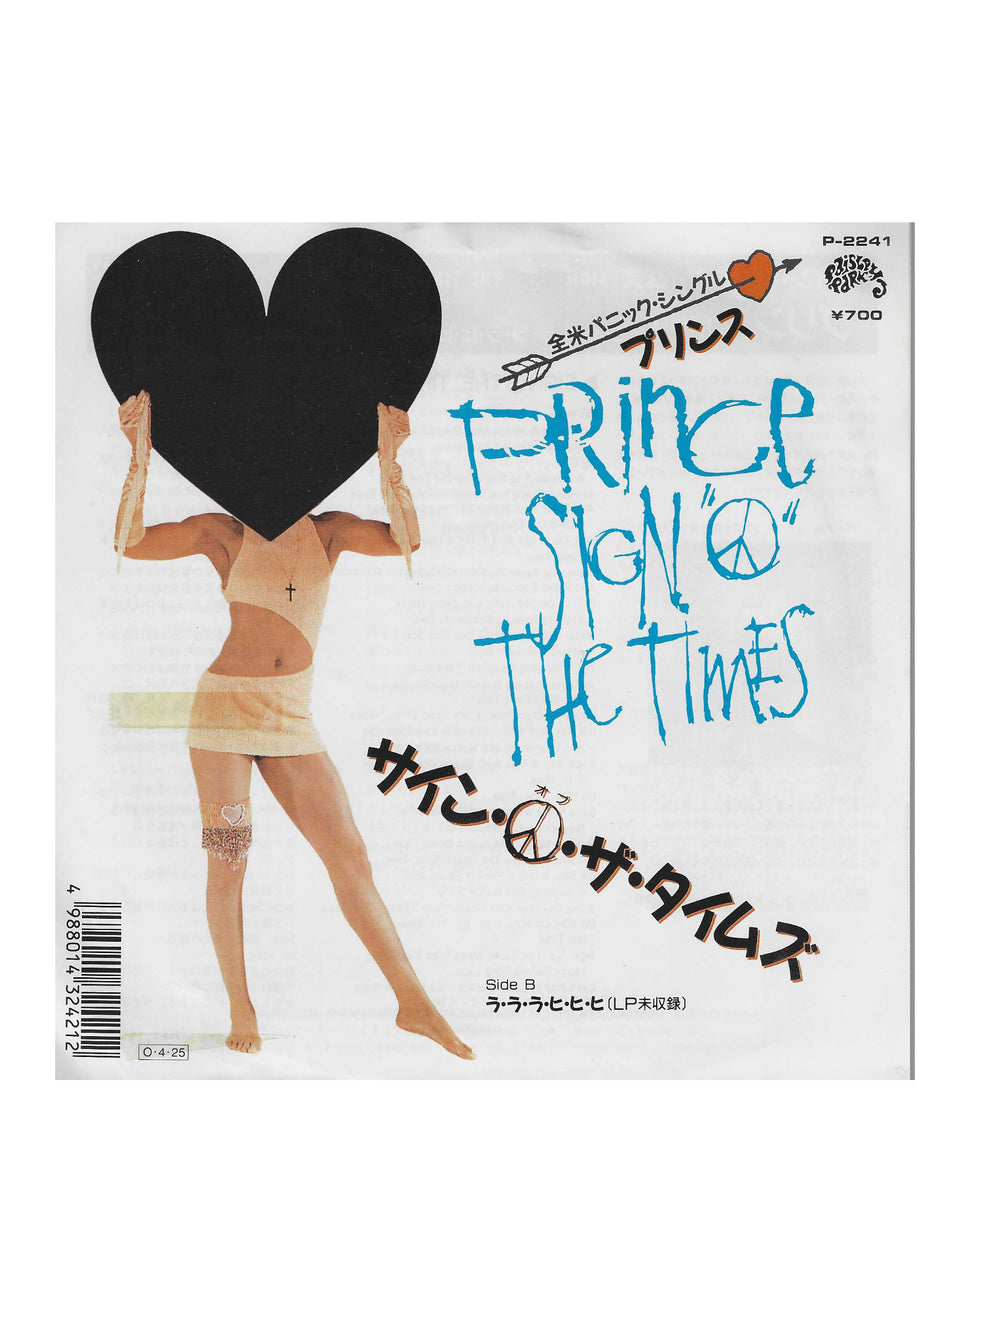 Prince – Sign O The Times  7 Inch Vinyl Single 1987 Original Japan Wrap Sleeve PROMO